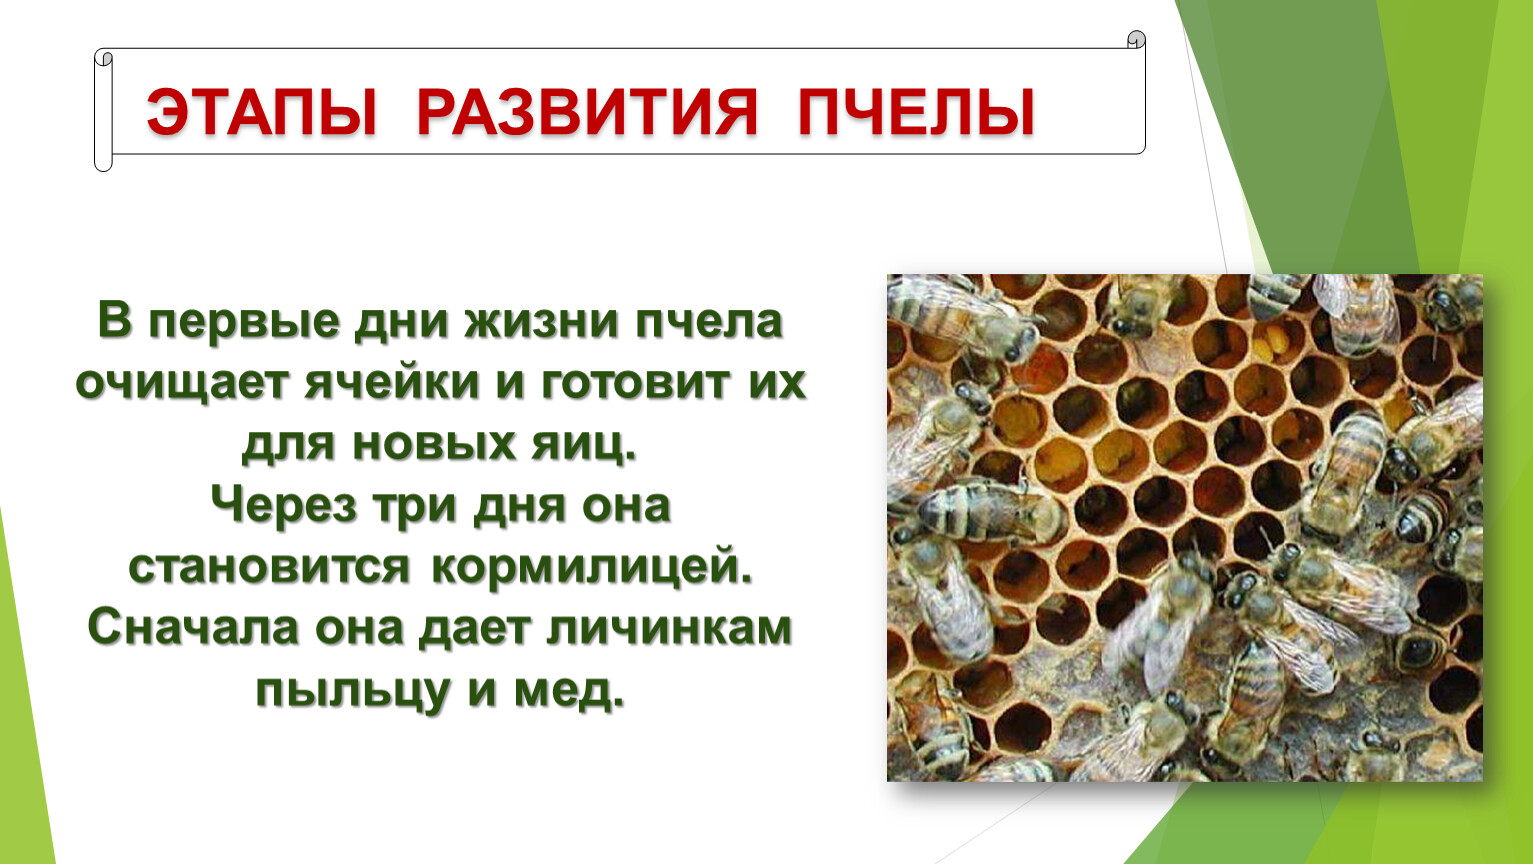 Таблица развития пчел. Этапы развития пчелы. Этапы жизни пчелы. Стадии развития пчелы. Цикл развития пчелы по дням.